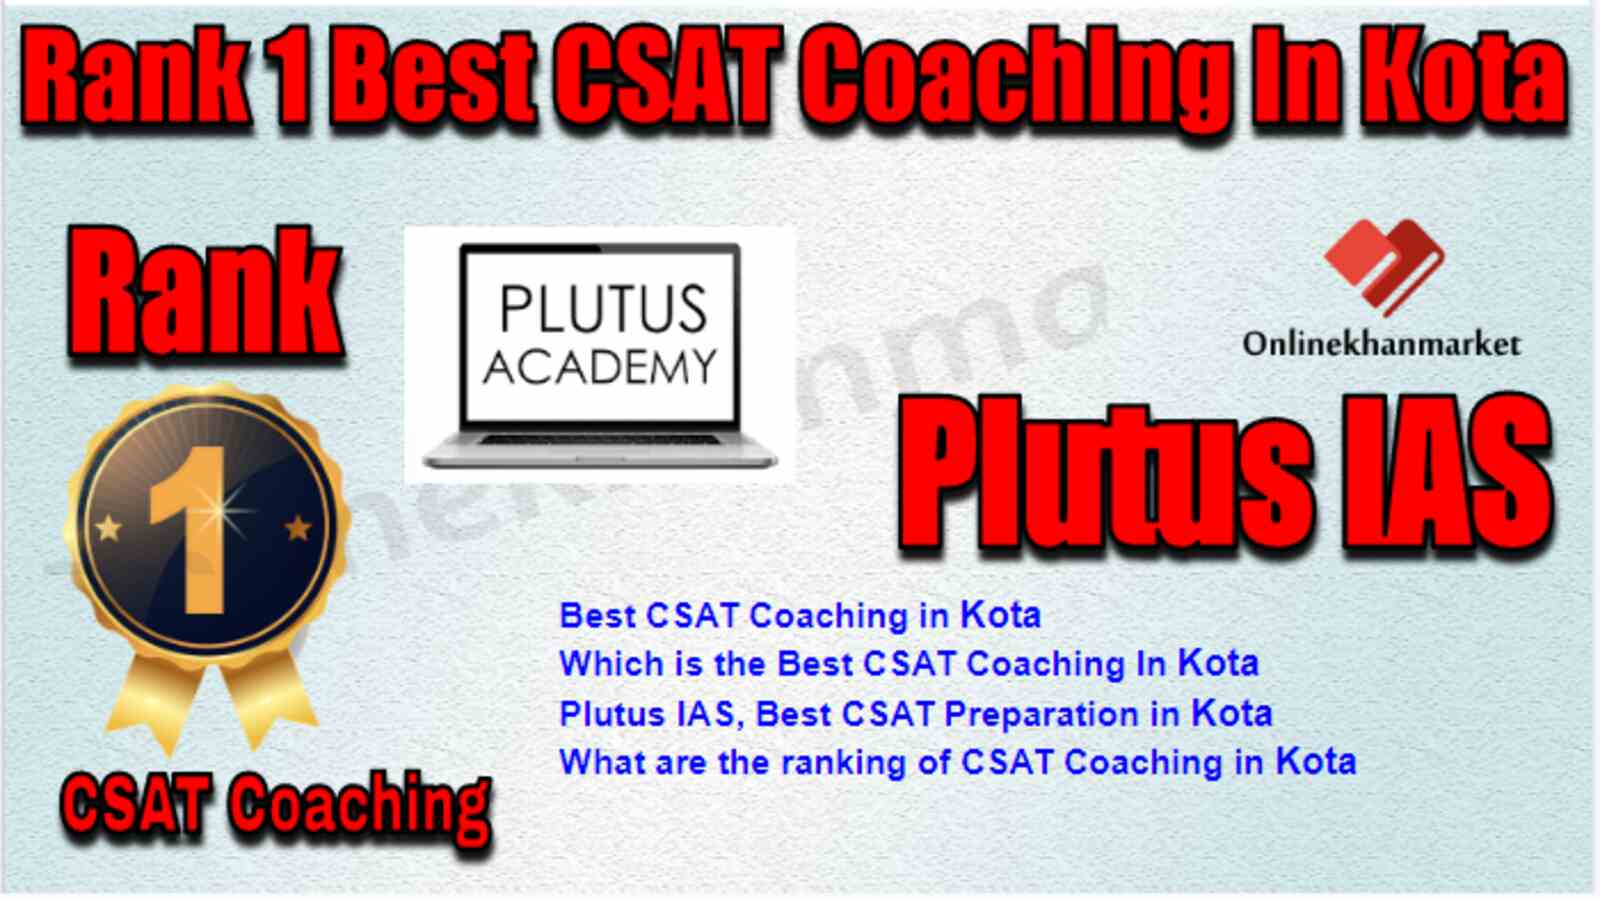 Rank 1 Best CSAT Coaching in Kota